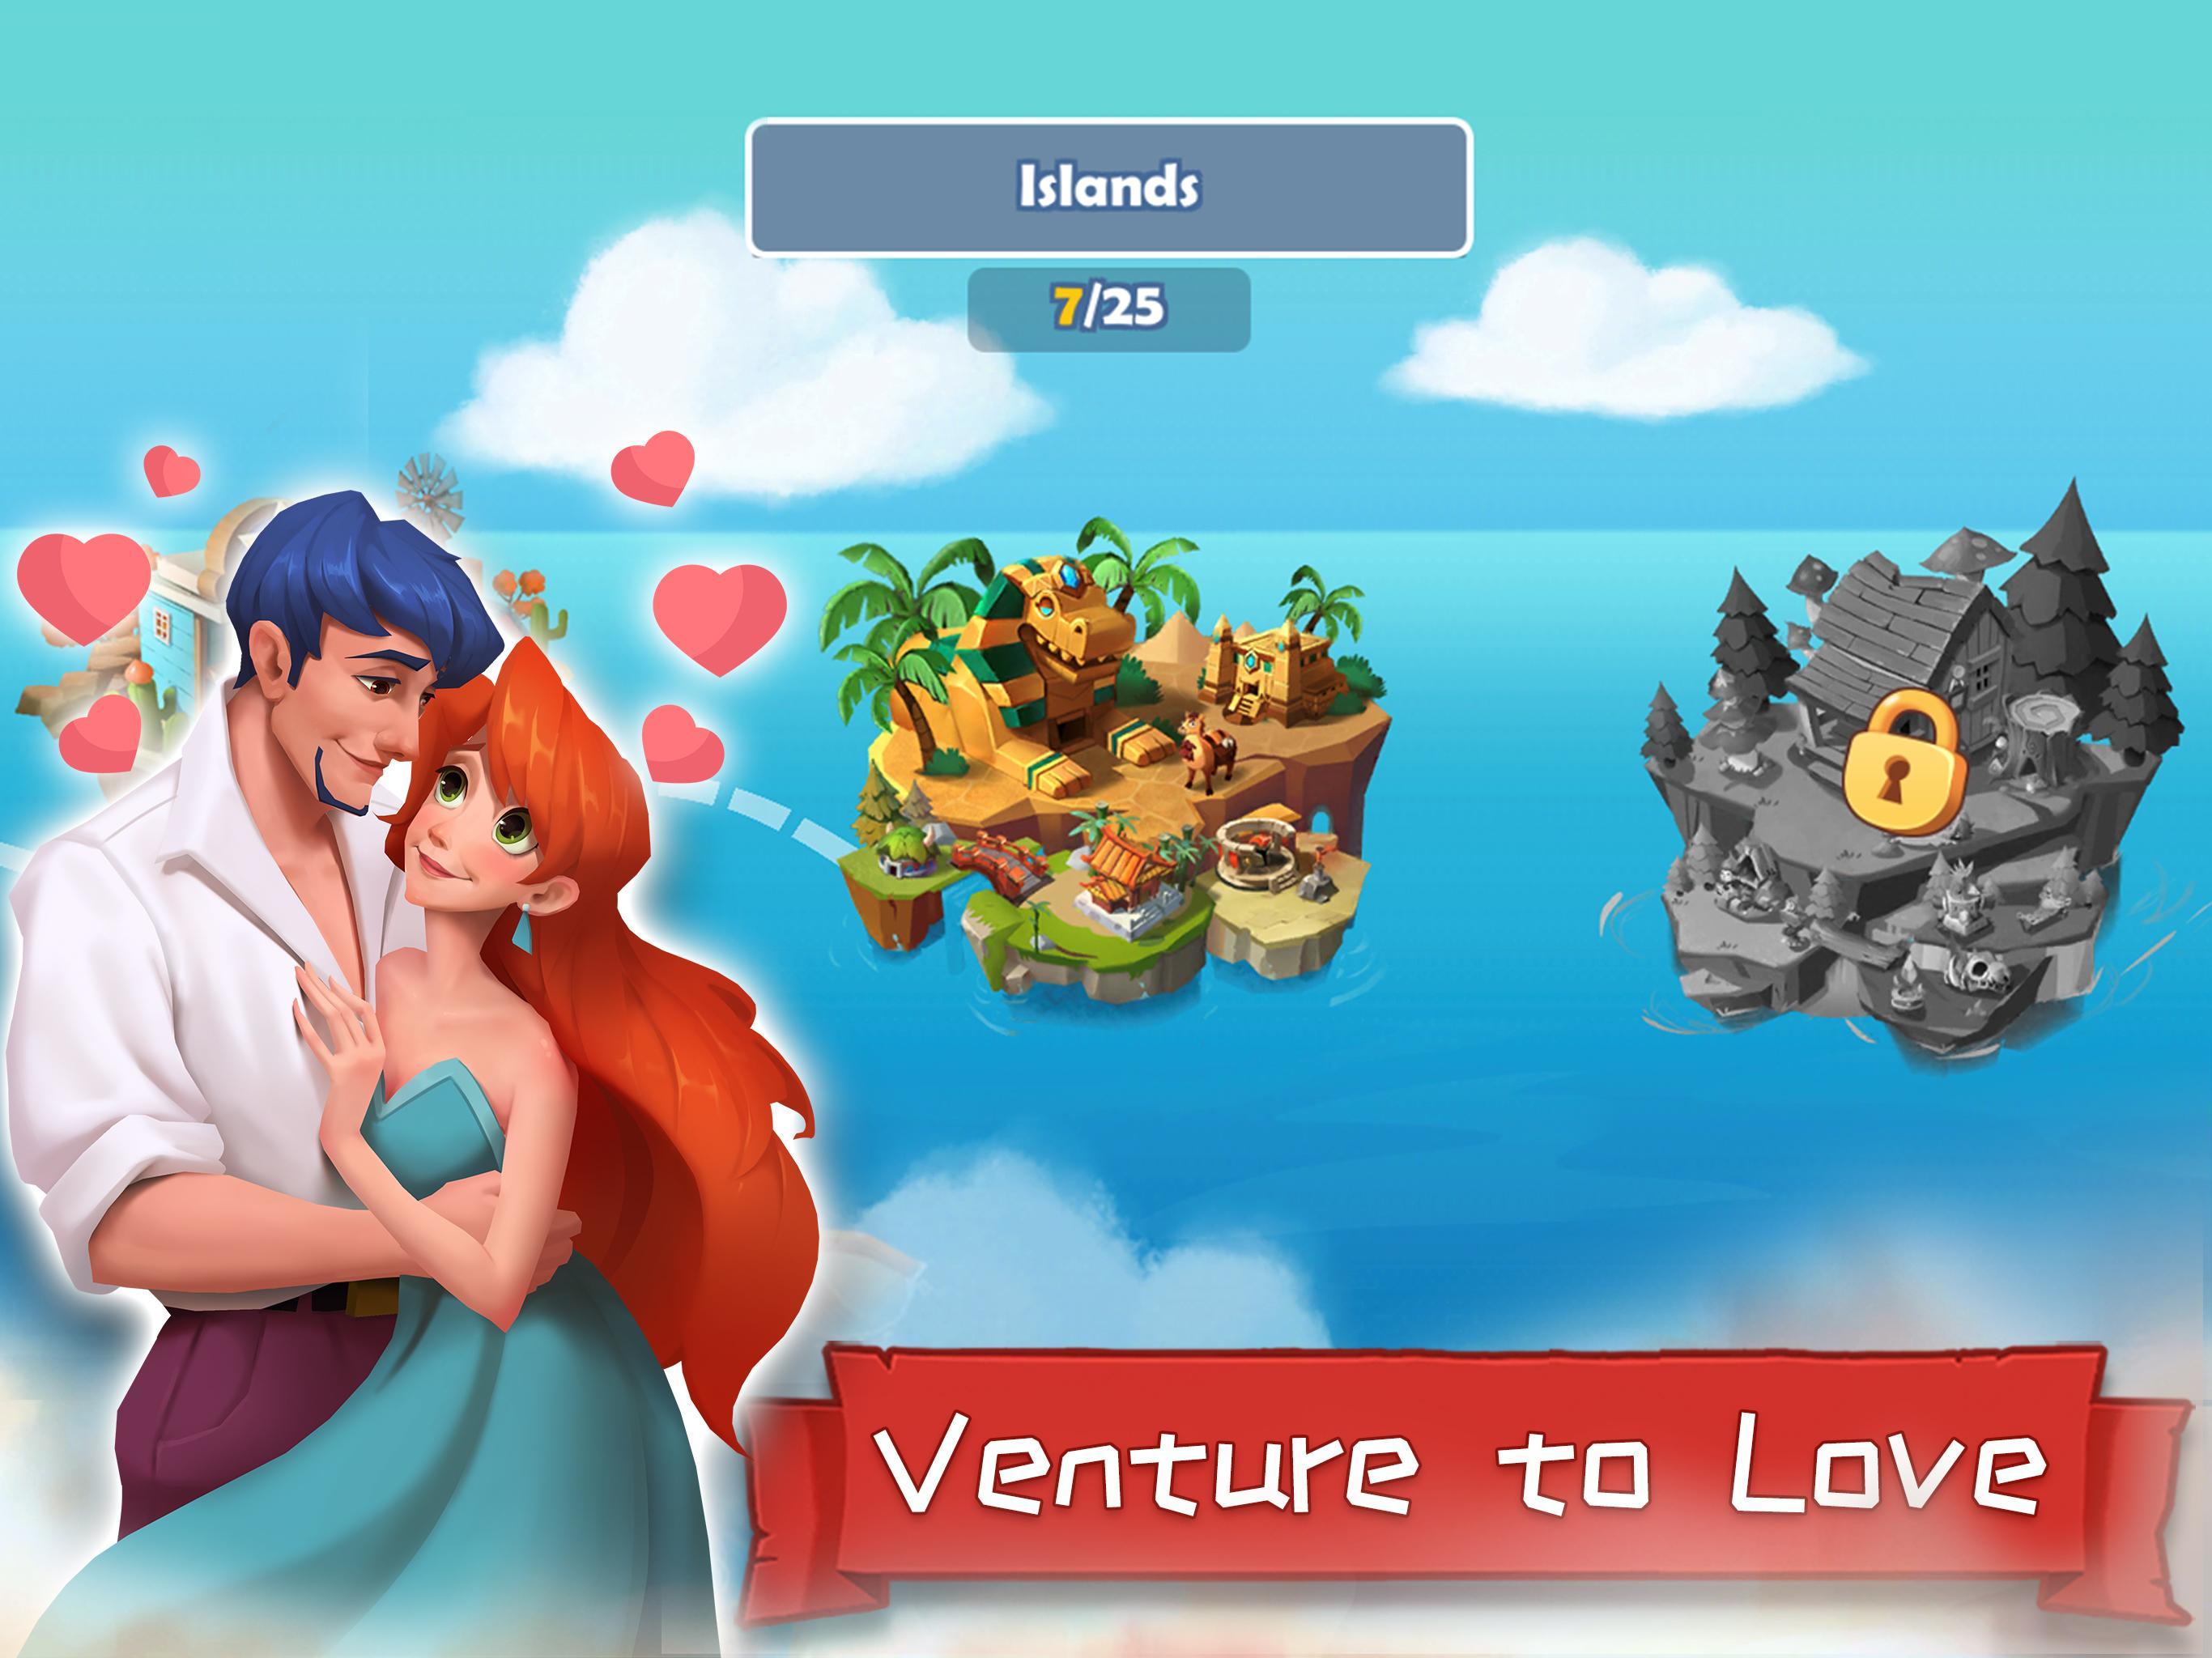 Screenshot of Adventure of Love